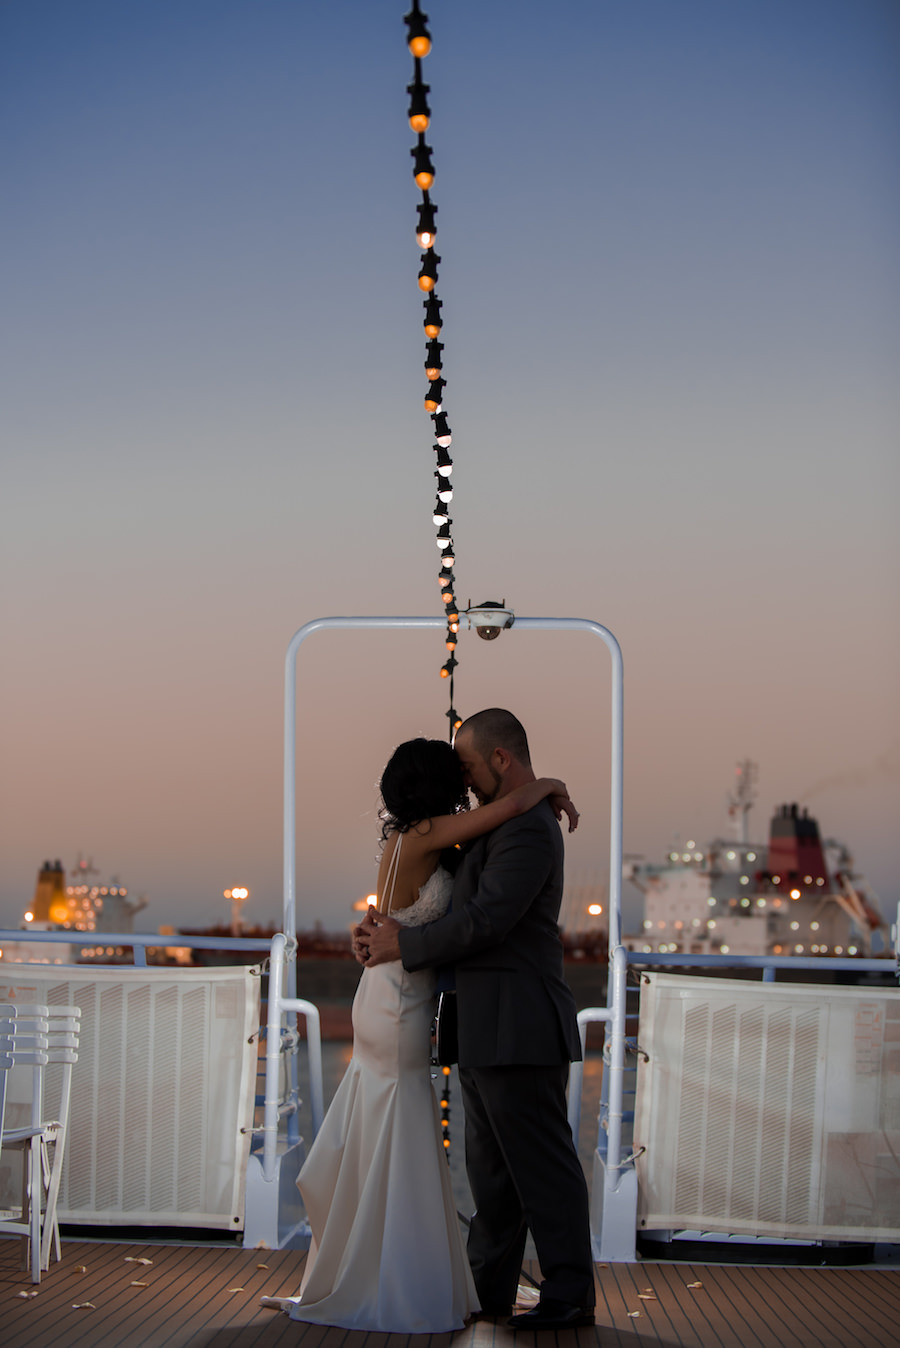 Bride and Groom Wedding Day Portrait on Tampa Wedding Venue Yacht Starship II | Florida Boat Wedding